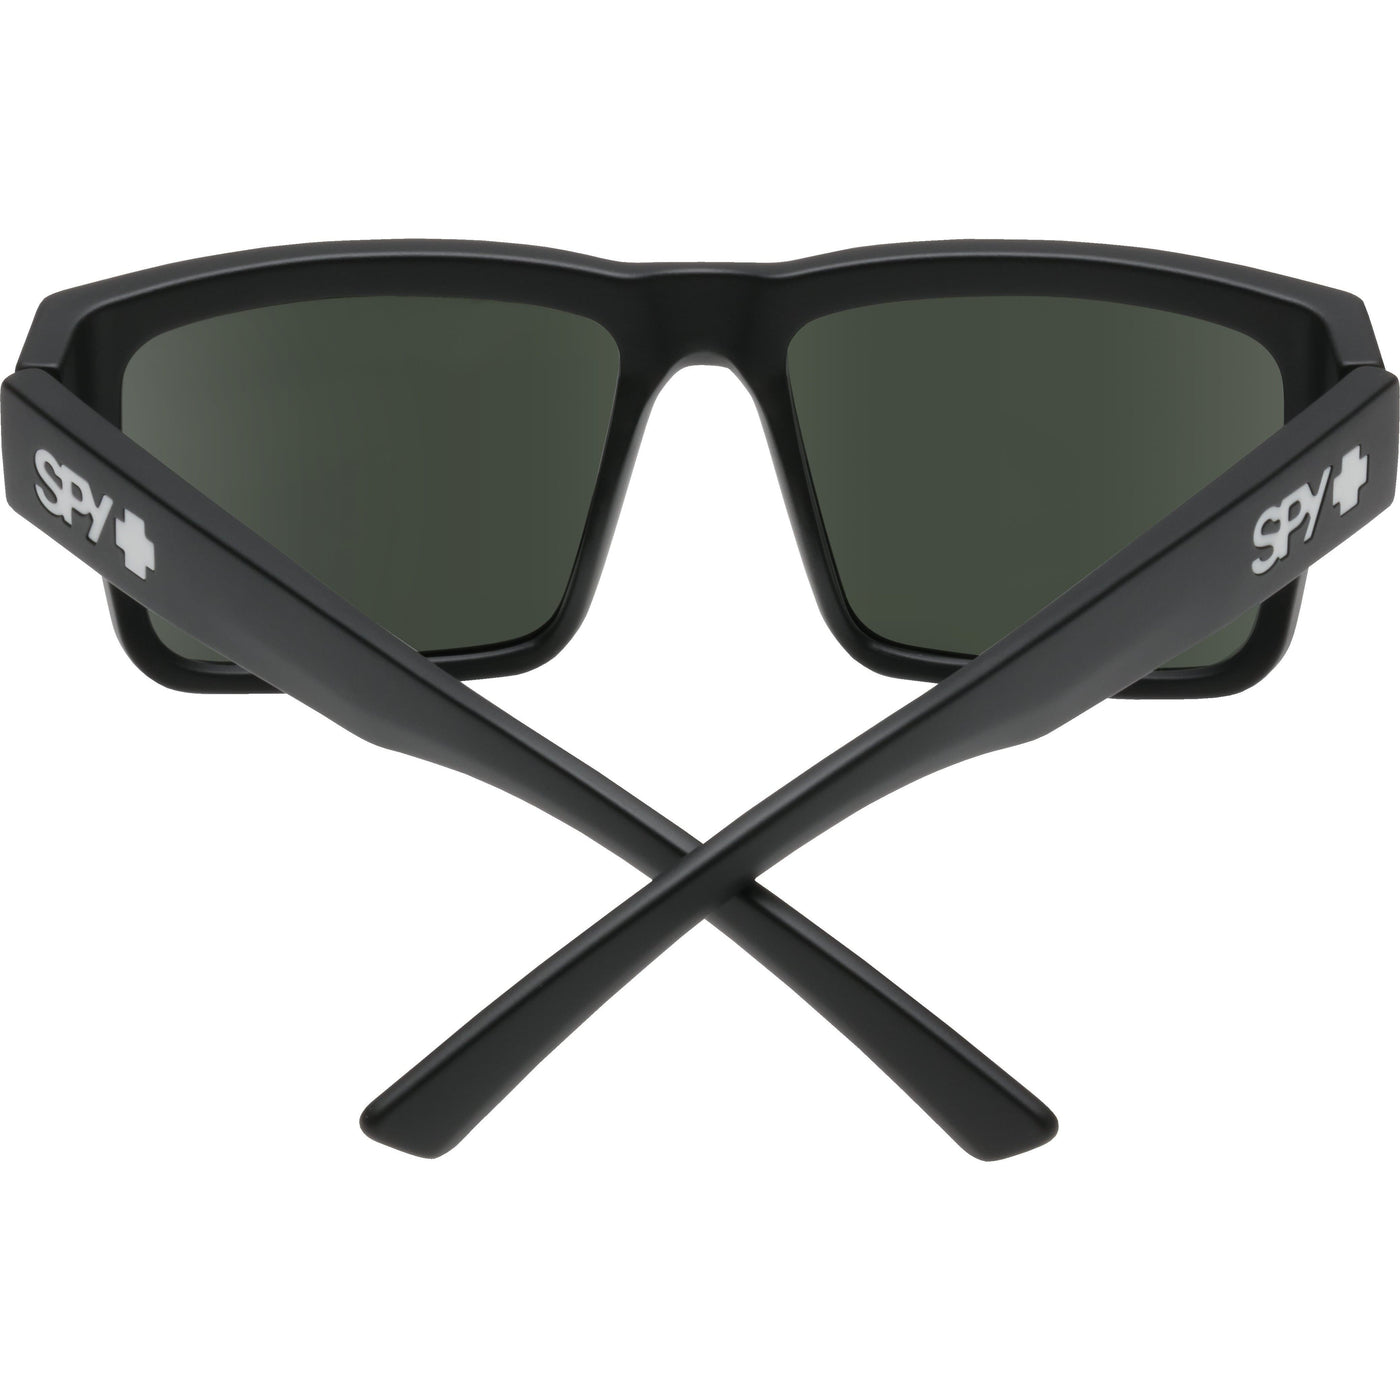 SPY MONTANA Sunglasses, Happy Lens - Gray/Green 8Lines Shop - Fast Shipping